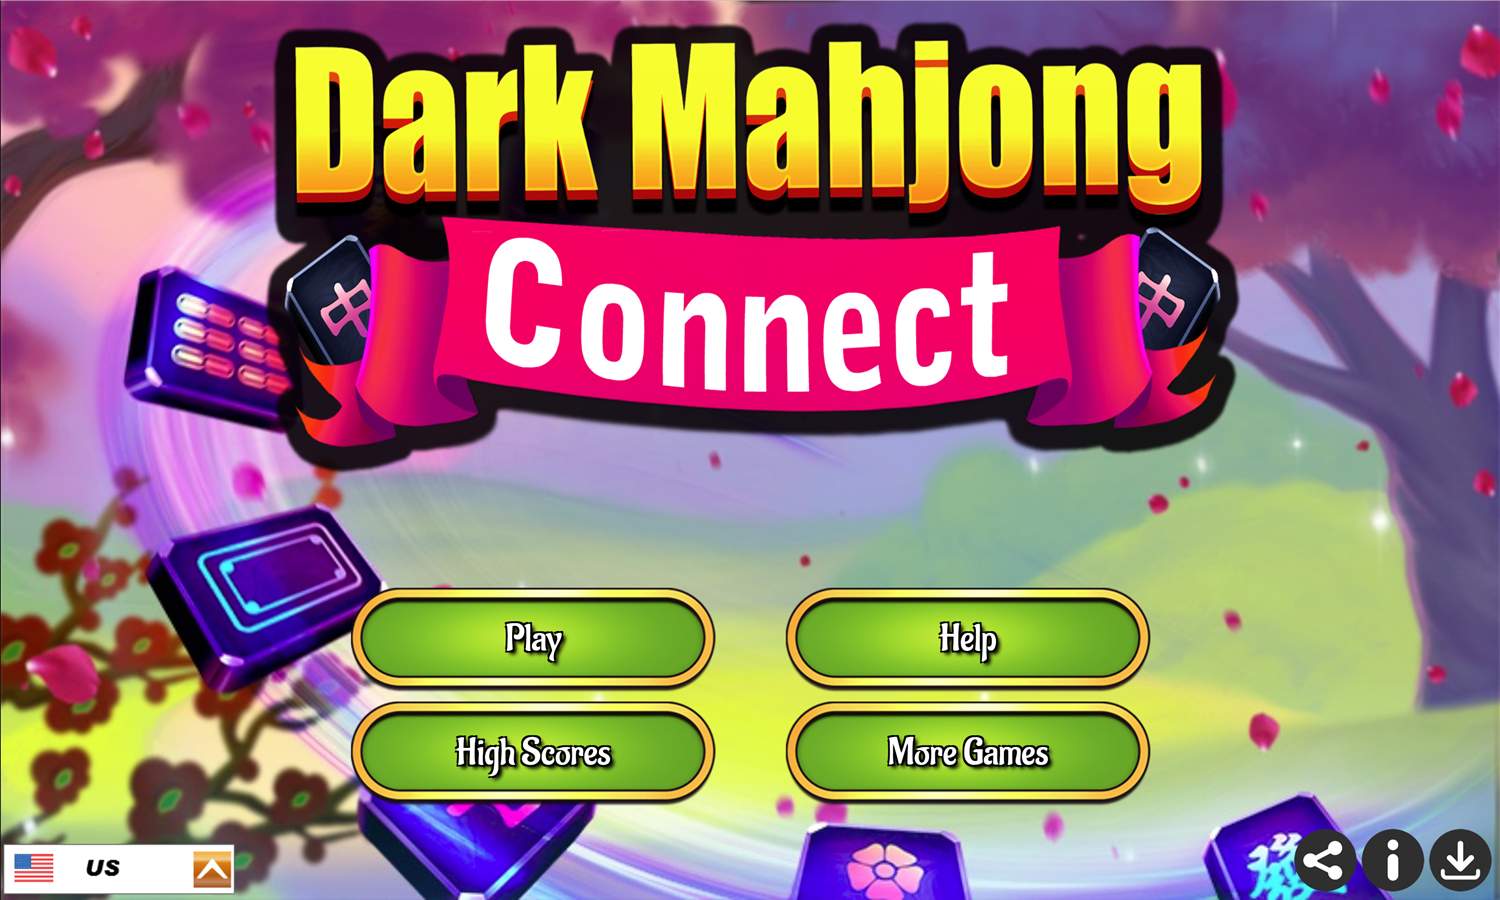 Dark Mahjong Connect Game Welcome Screen Screenshot.